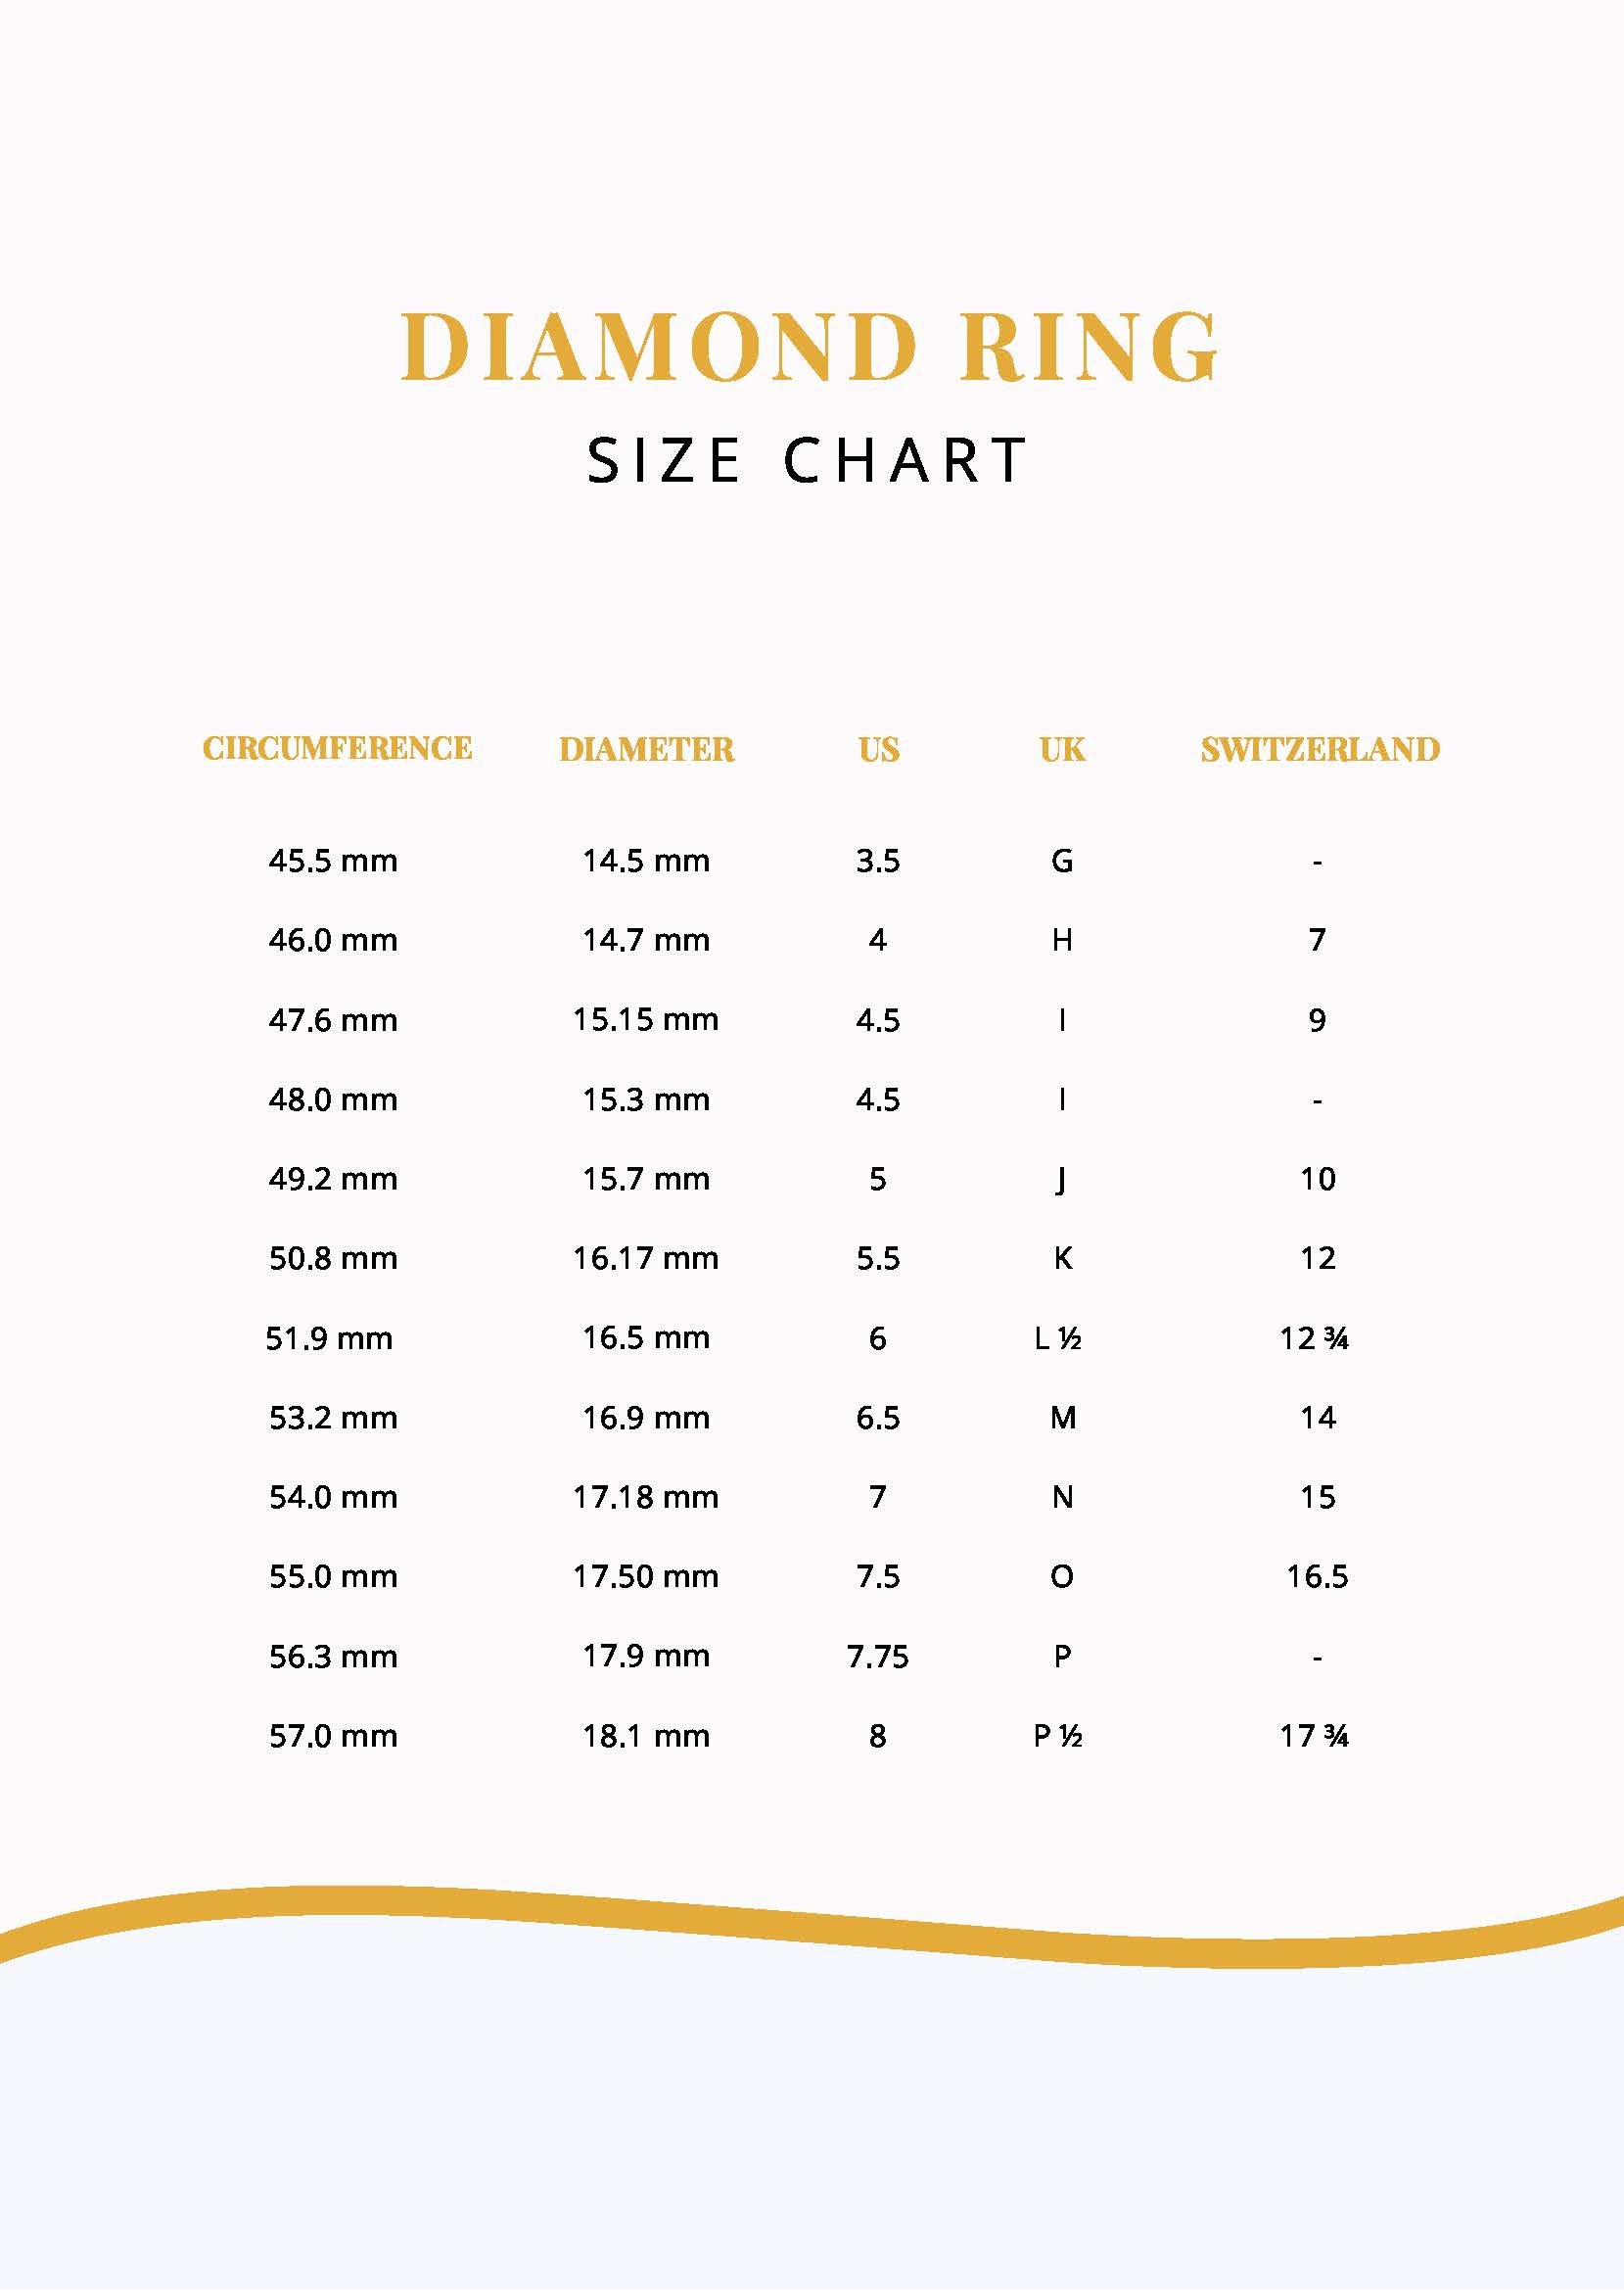 Diamond Ring Size Chart in PDF